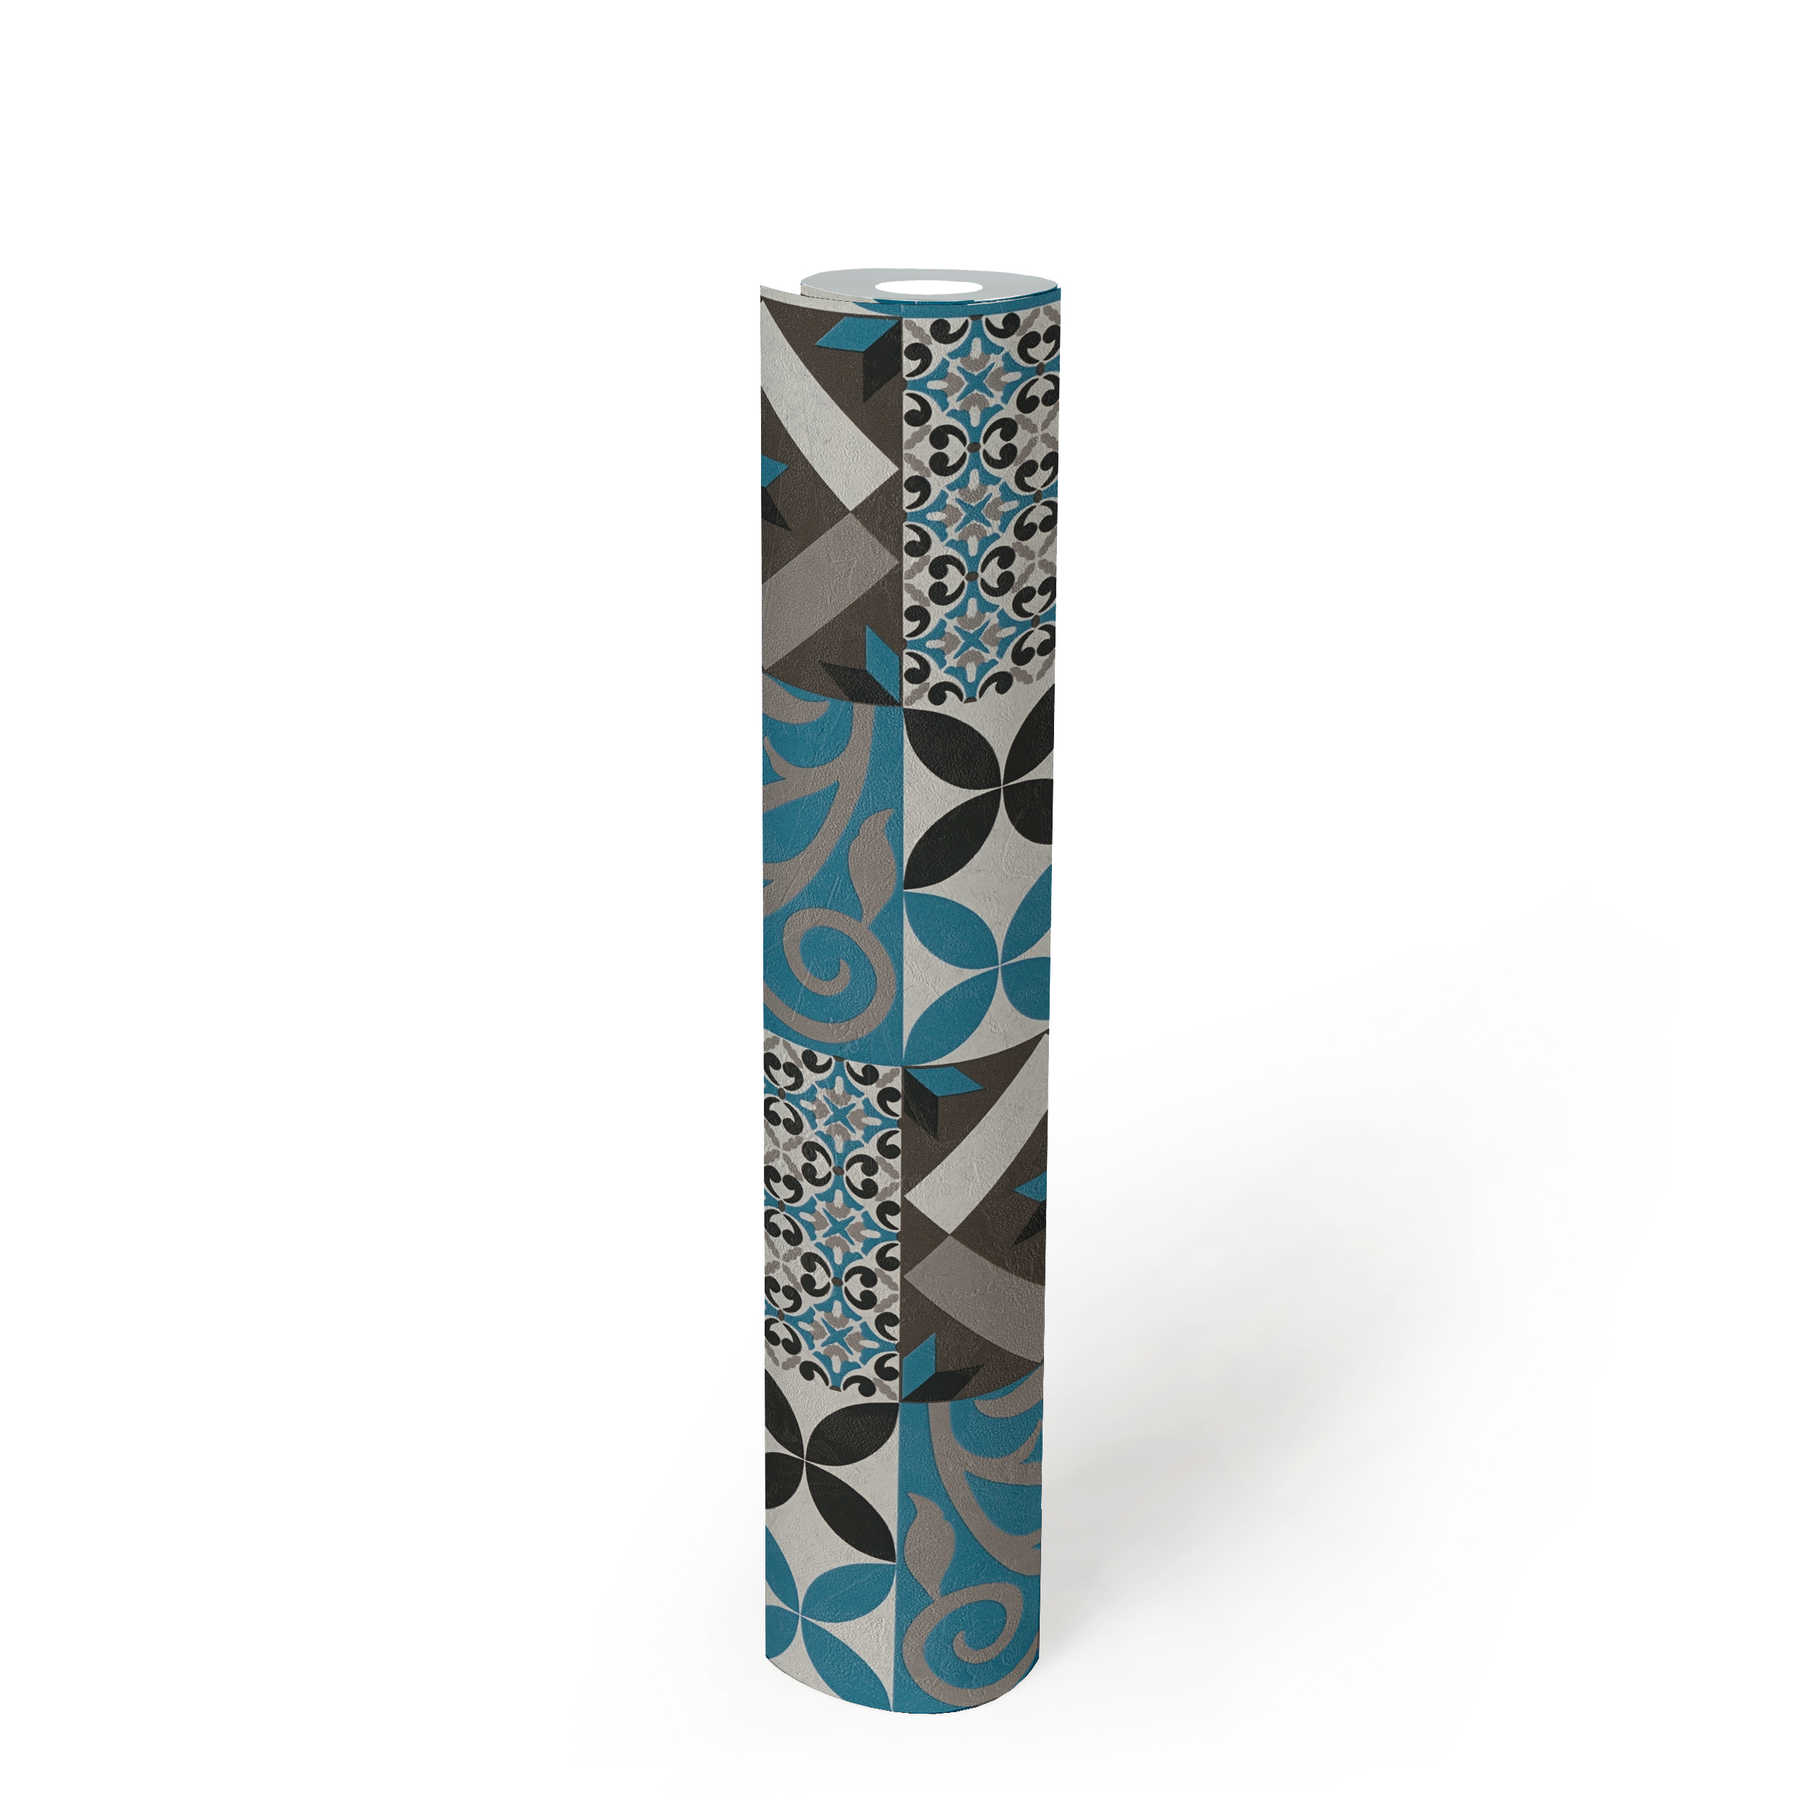             Non-woven wallpaper tiles pattern mix - black, blue, anthracite
        